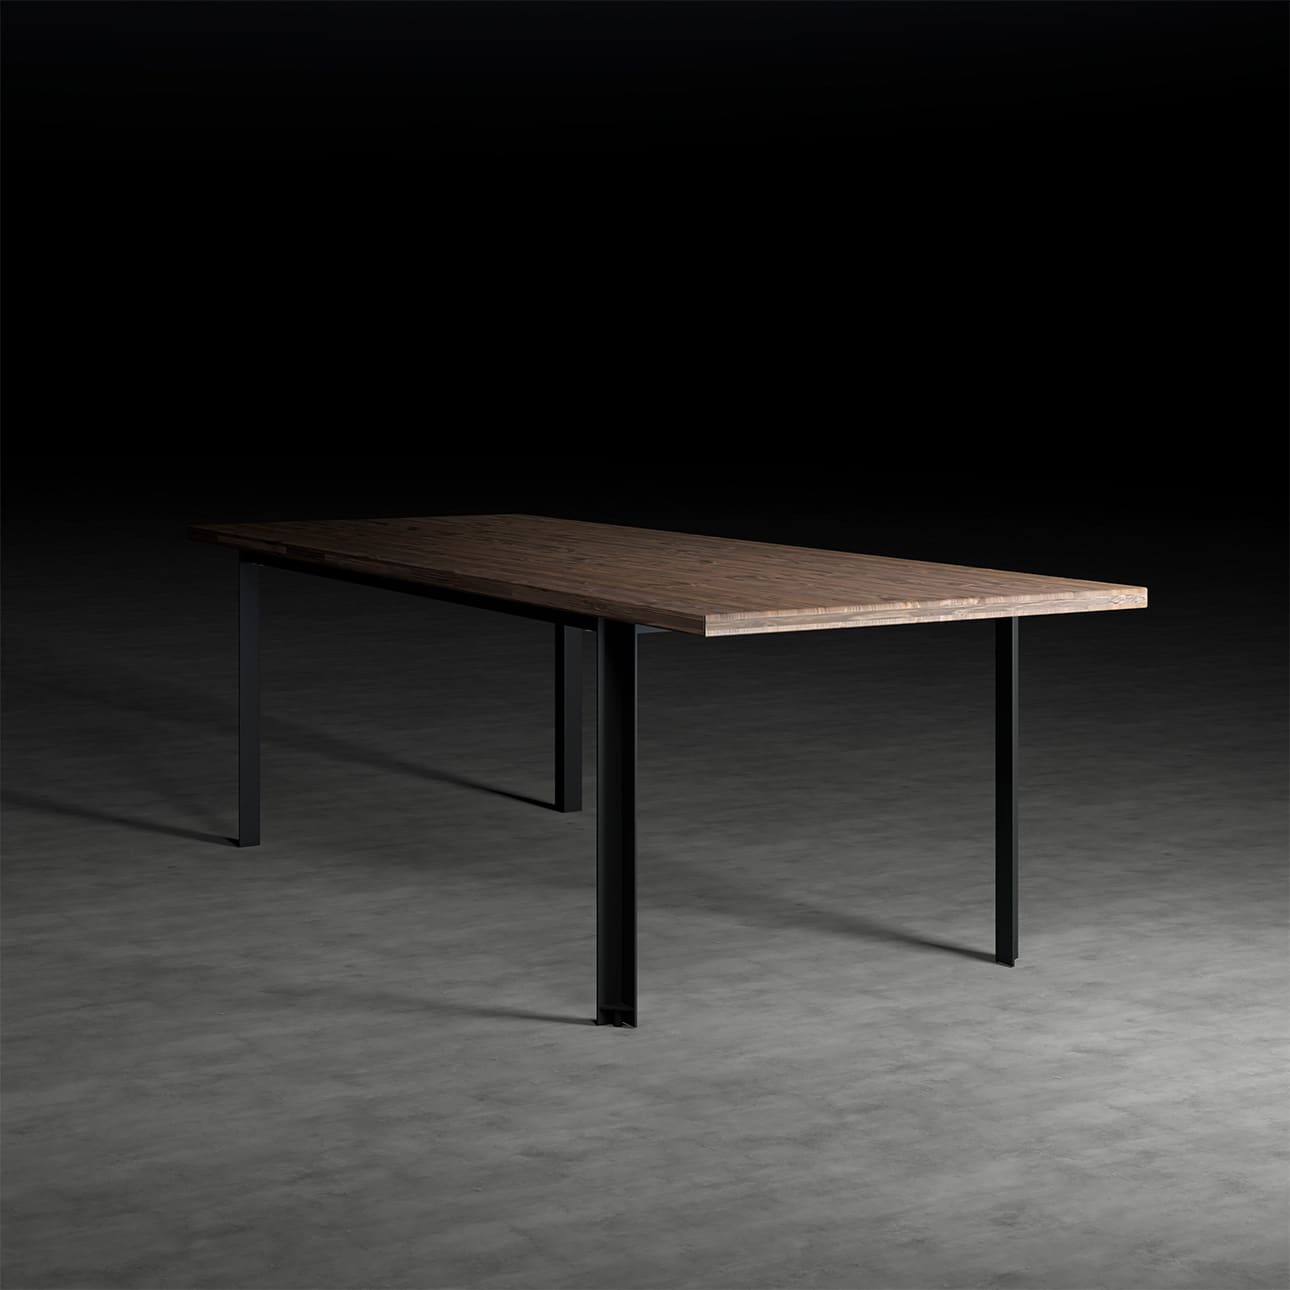 Tavola 作業テーブル スプルス積層材 ダイニングテーブル シンプル スタイリッシュ モダン おしゃれ 大型 大きい ちゃぶ台